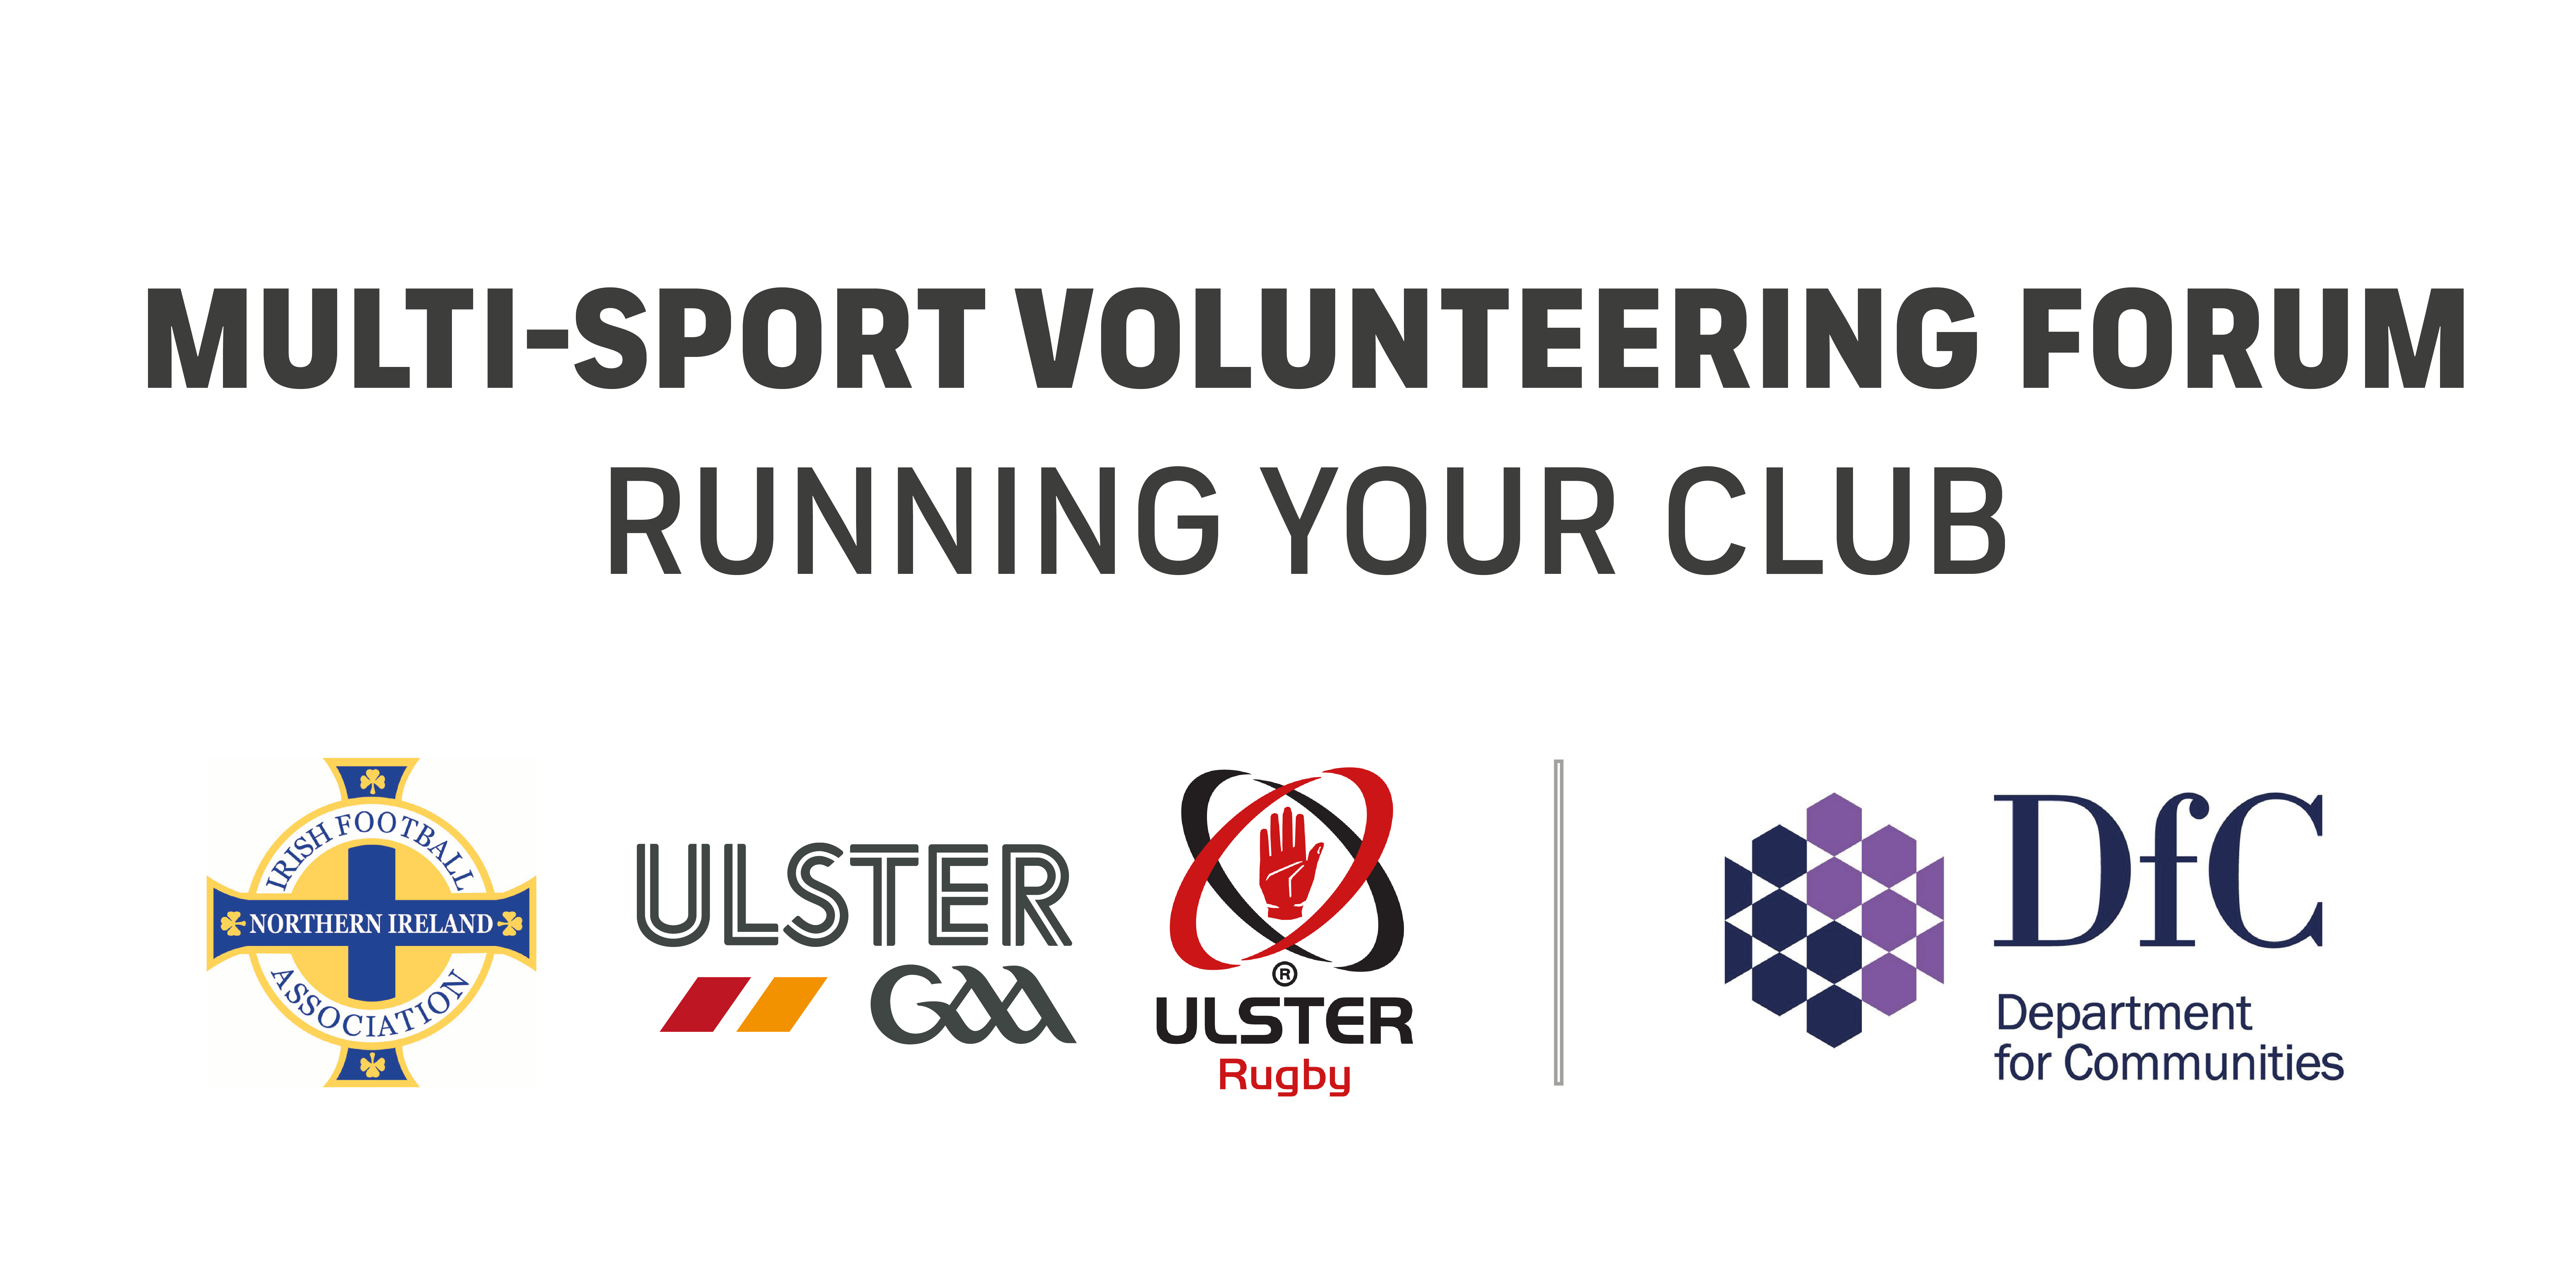 Register now for Multi-Sport Volunteering Forum